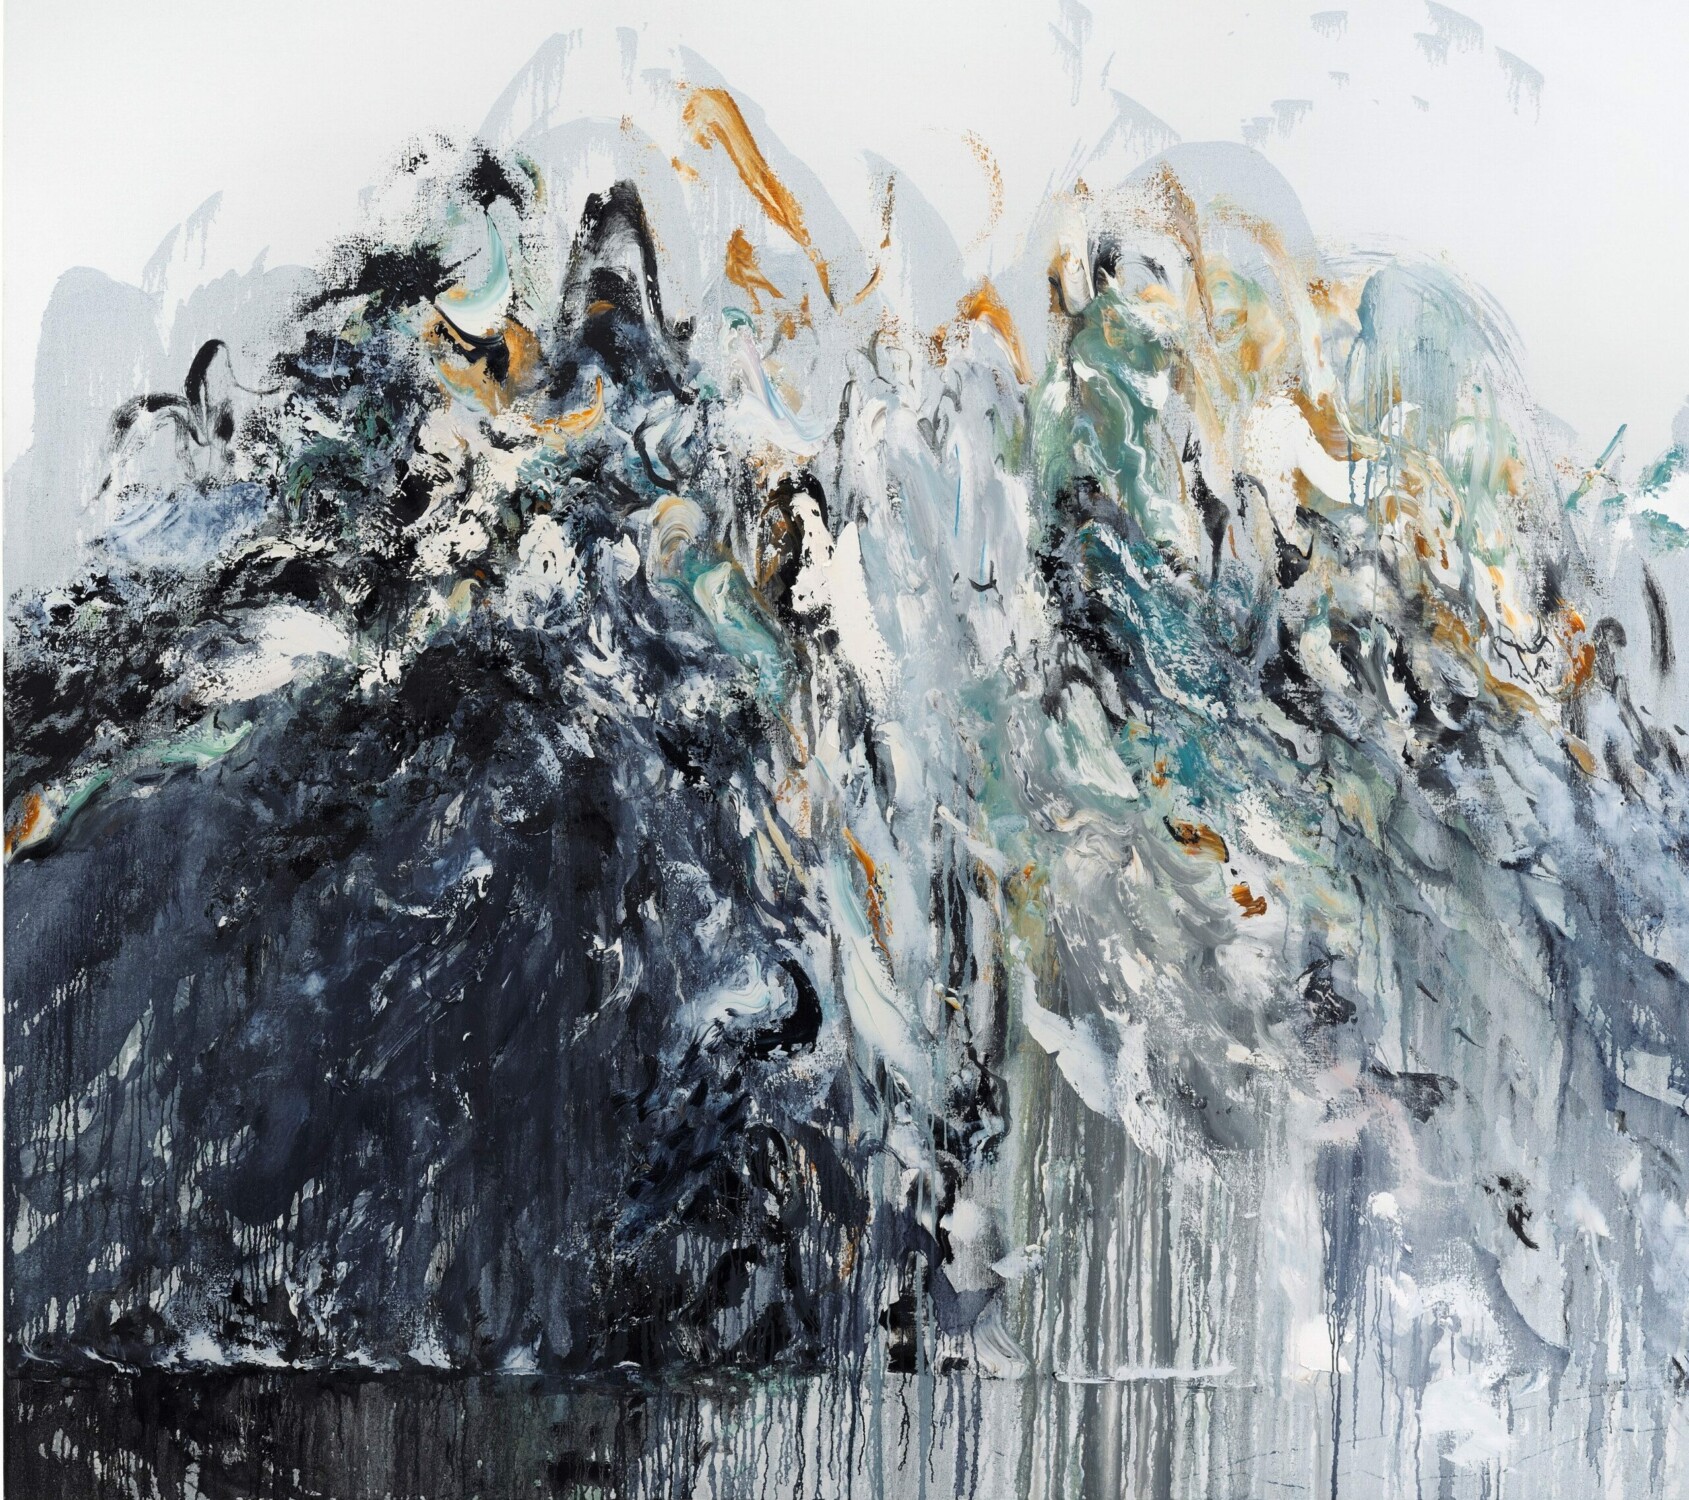 Maggi Hambling, Wall of water VI, 2011, oil on canvas, 78 x 89 in., 198.1 x 226.1 cm